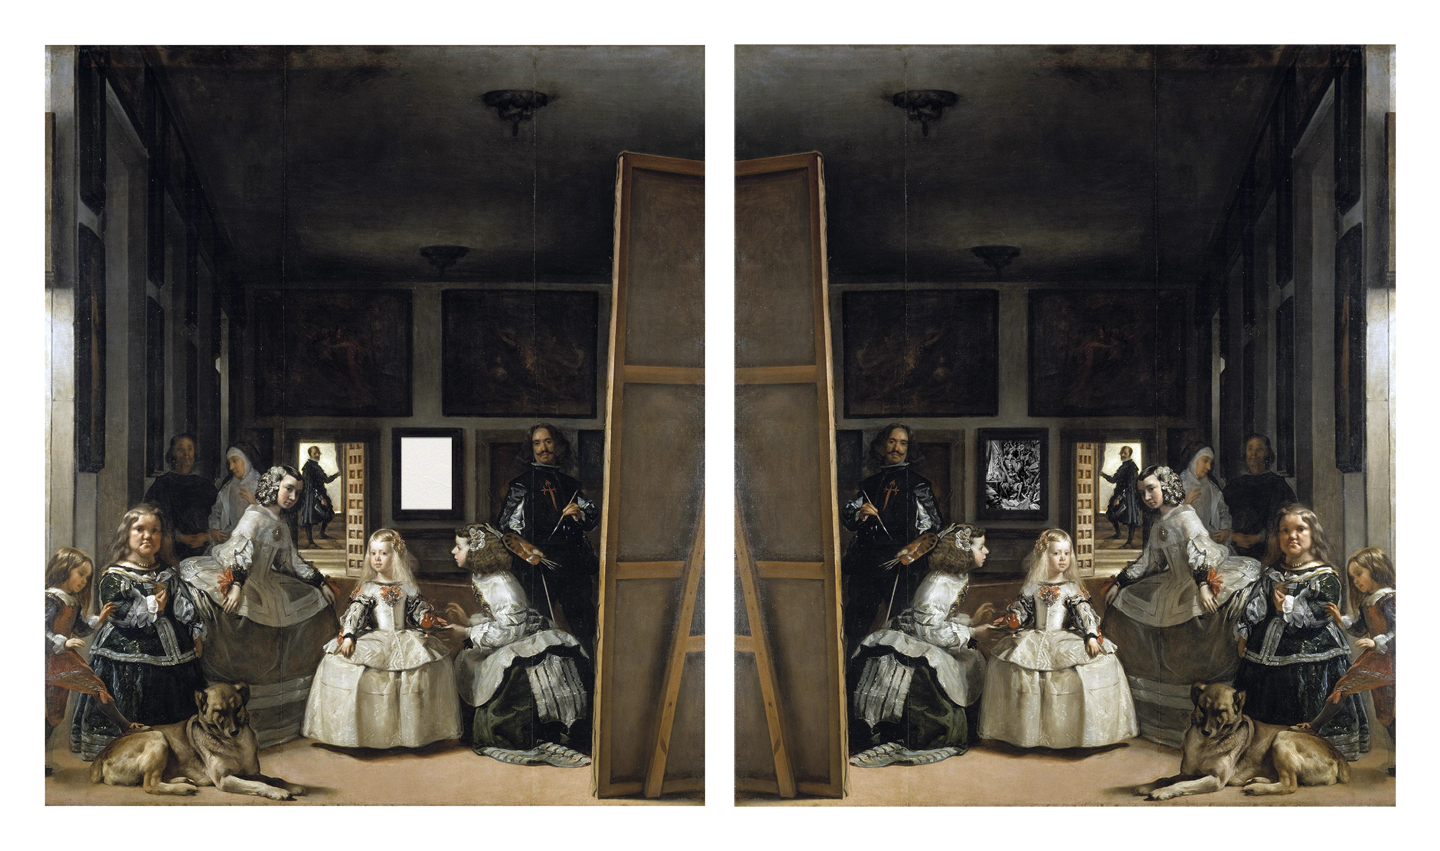 A Secret of Las Meninas / Renaissance meets Modern by Velazquez of Classism as a matchmaker in Lisdoonvarna